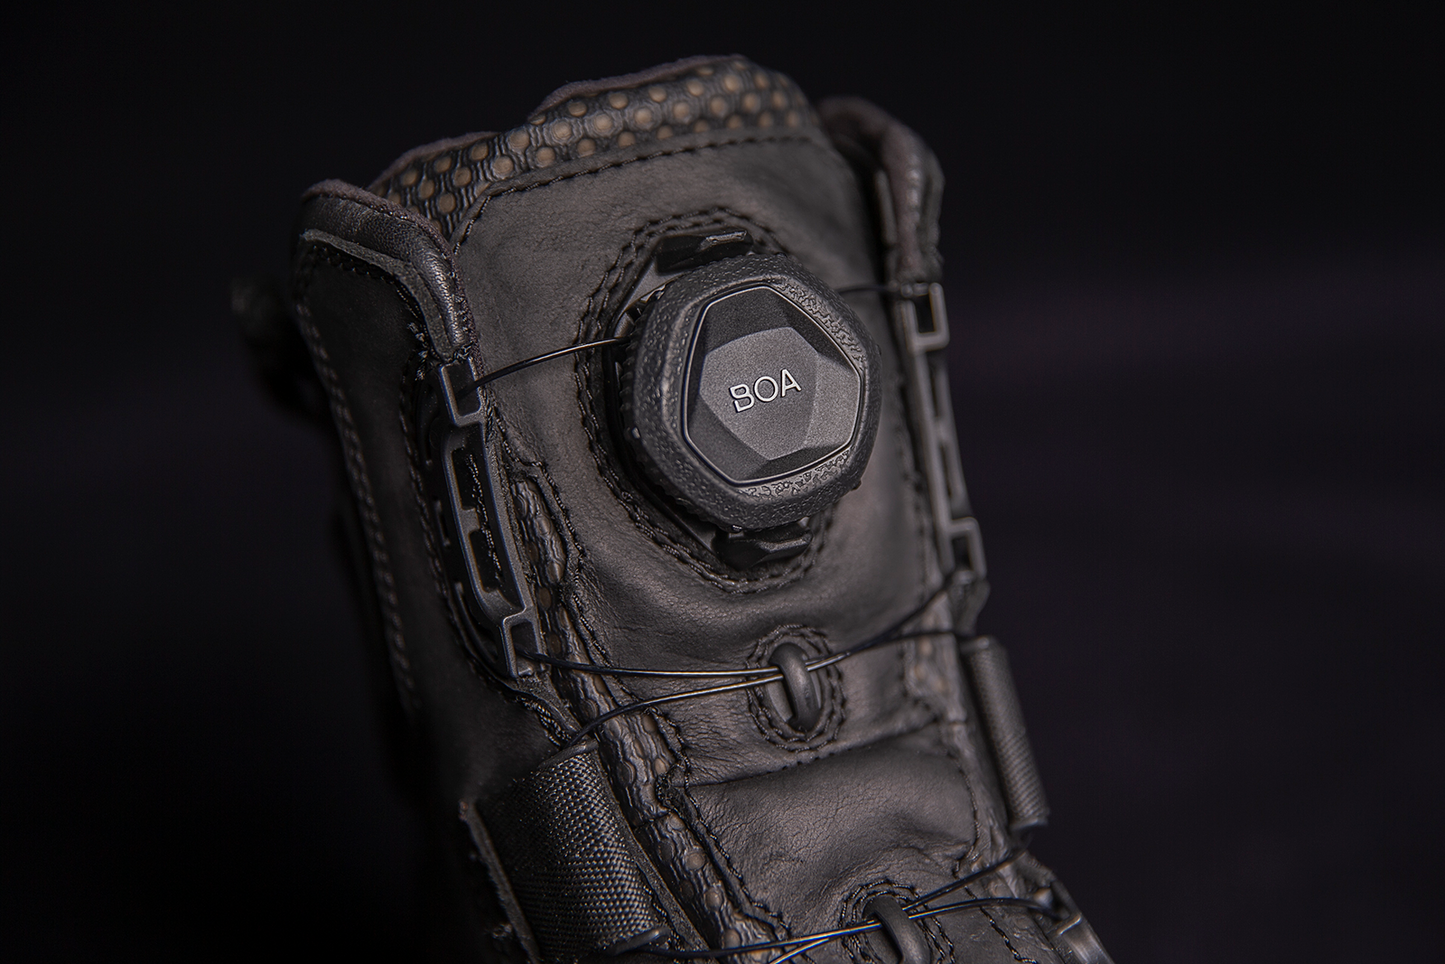 ICON Stormhawk Boots - Black - Size 7 3403-1149